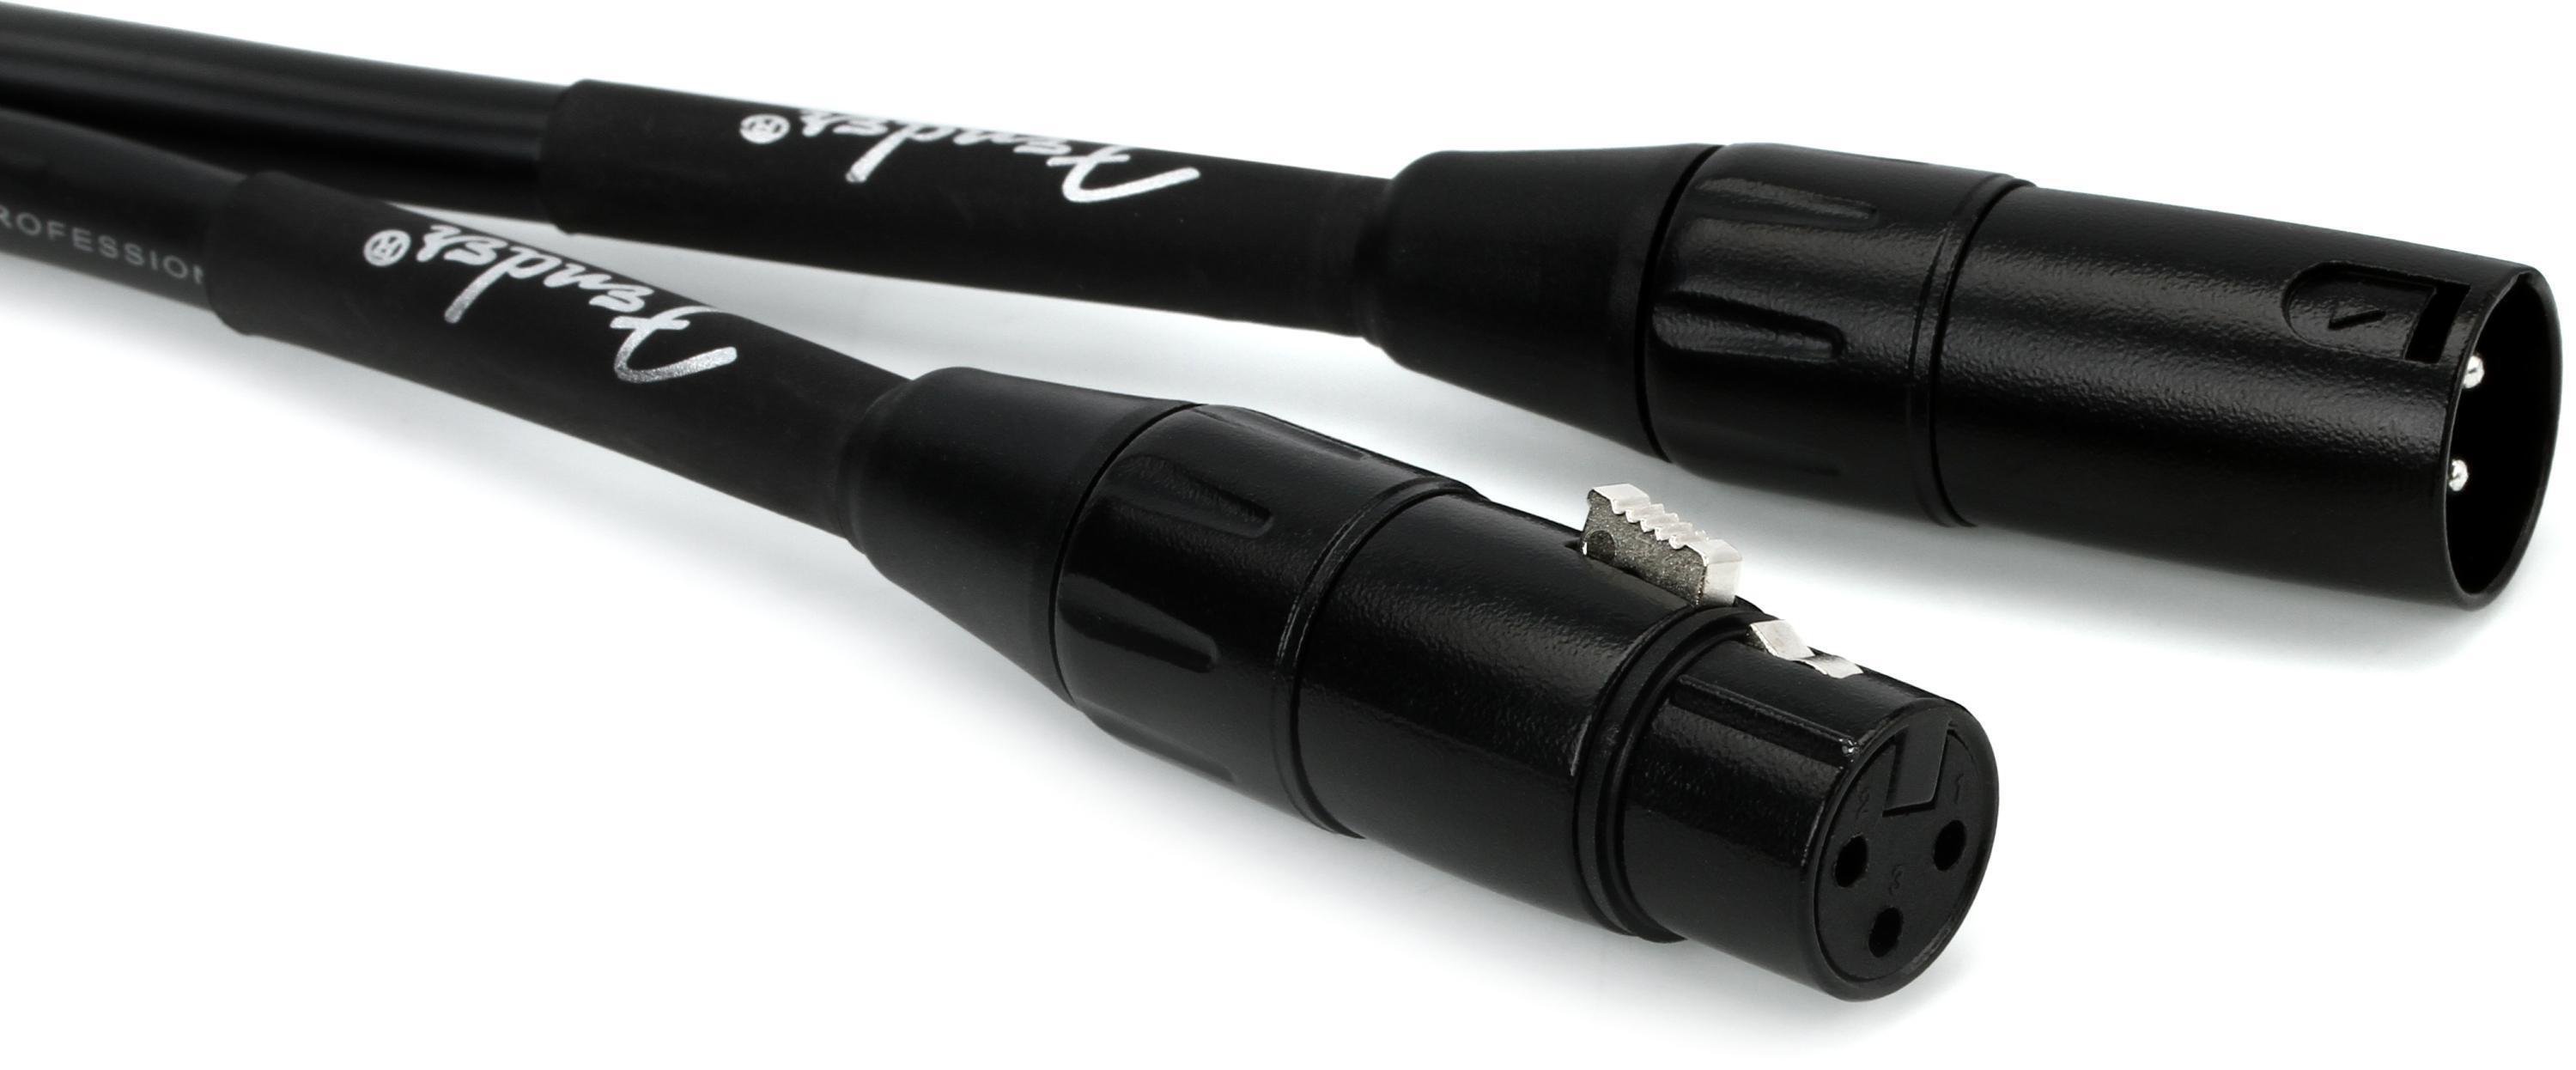 Fender Profissional XLR XLR 3m, Cable for microphone